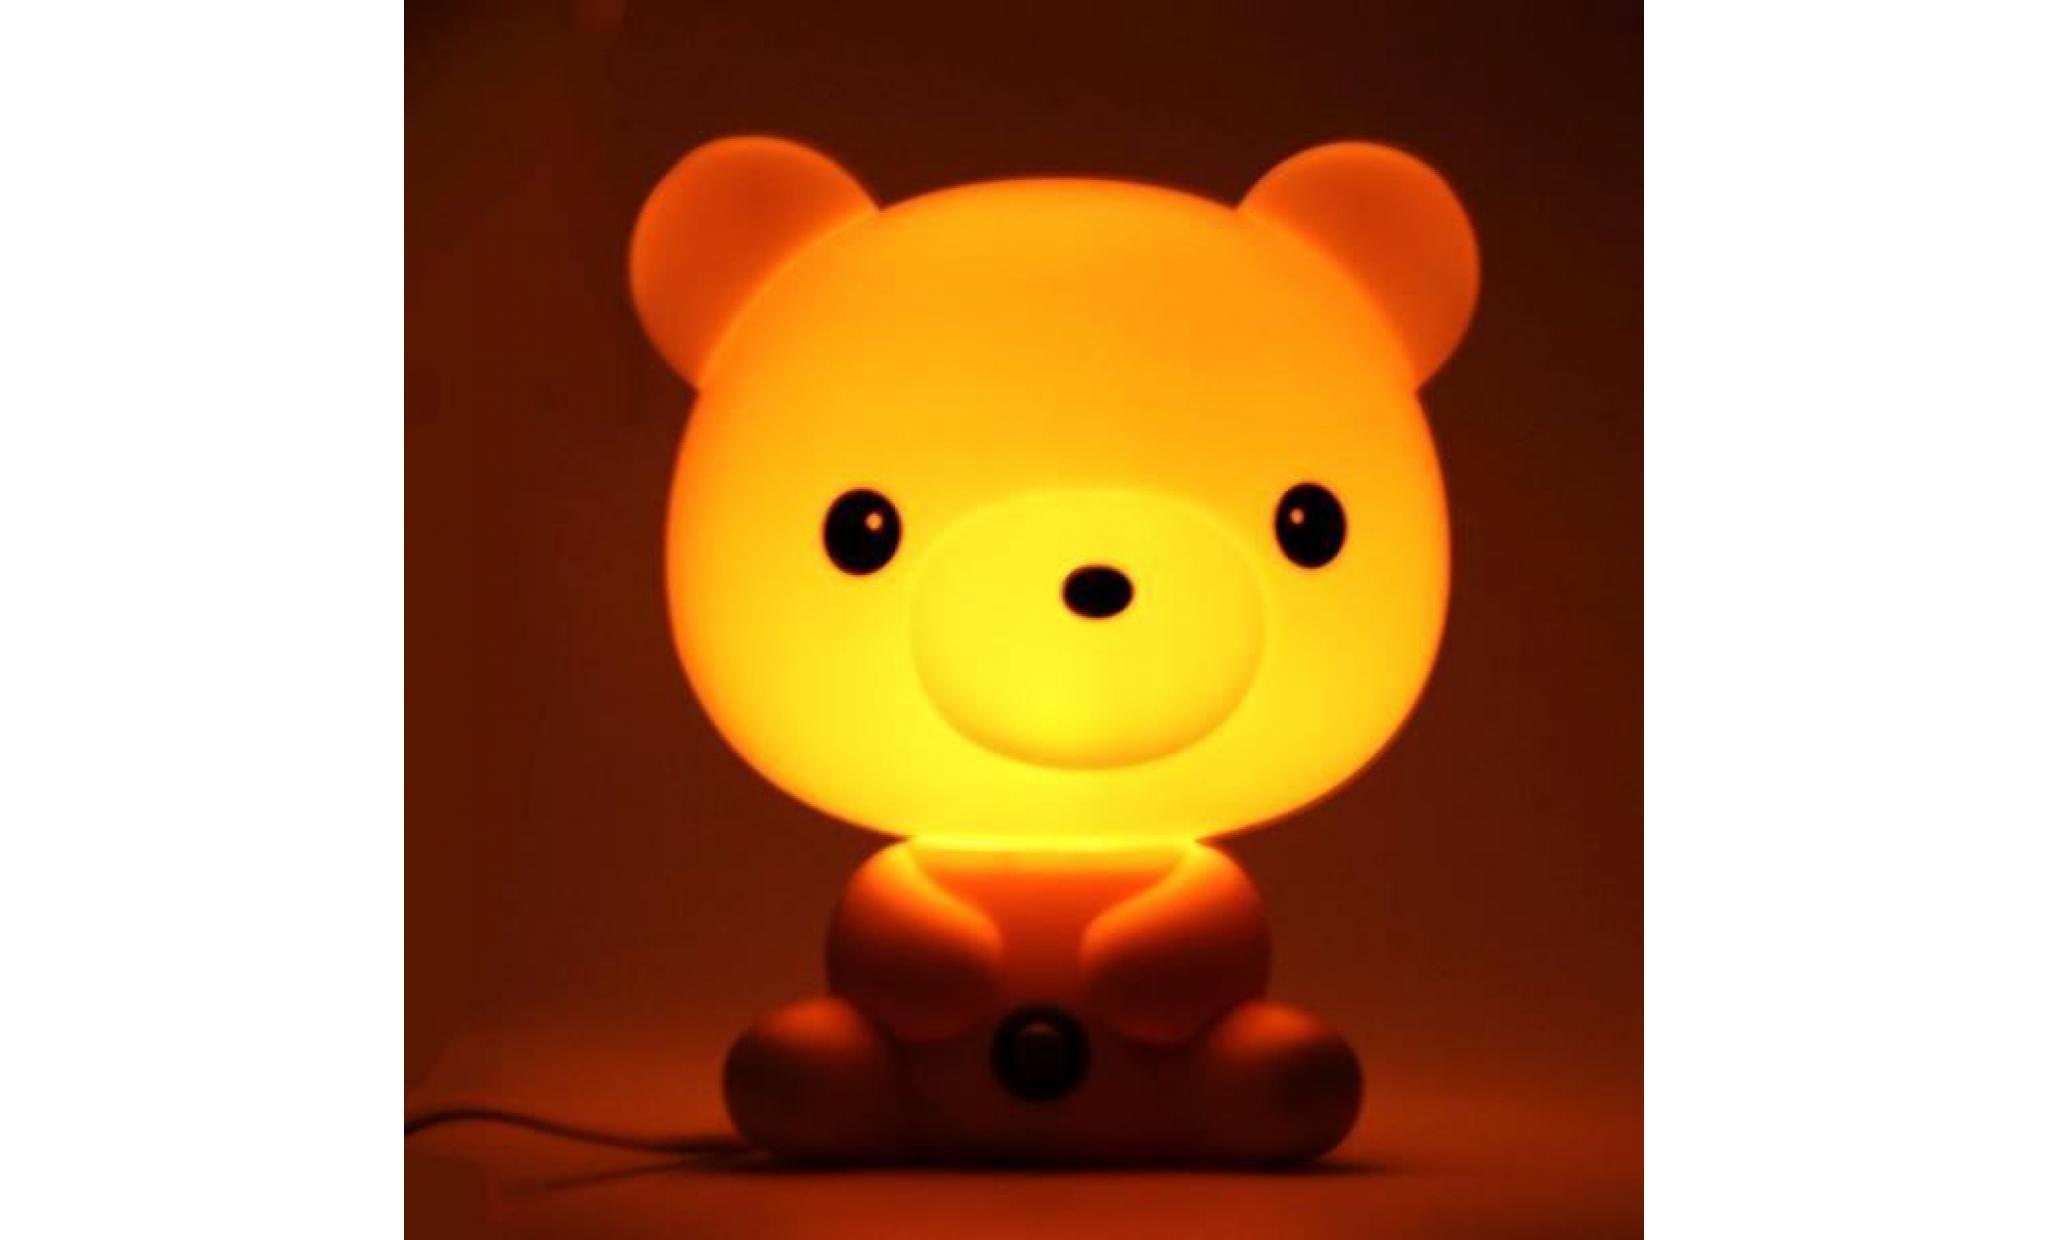 belle lampe de bureau animaux led lampe de bureau lampe cadeau lumière de nuit@vivieronmies482